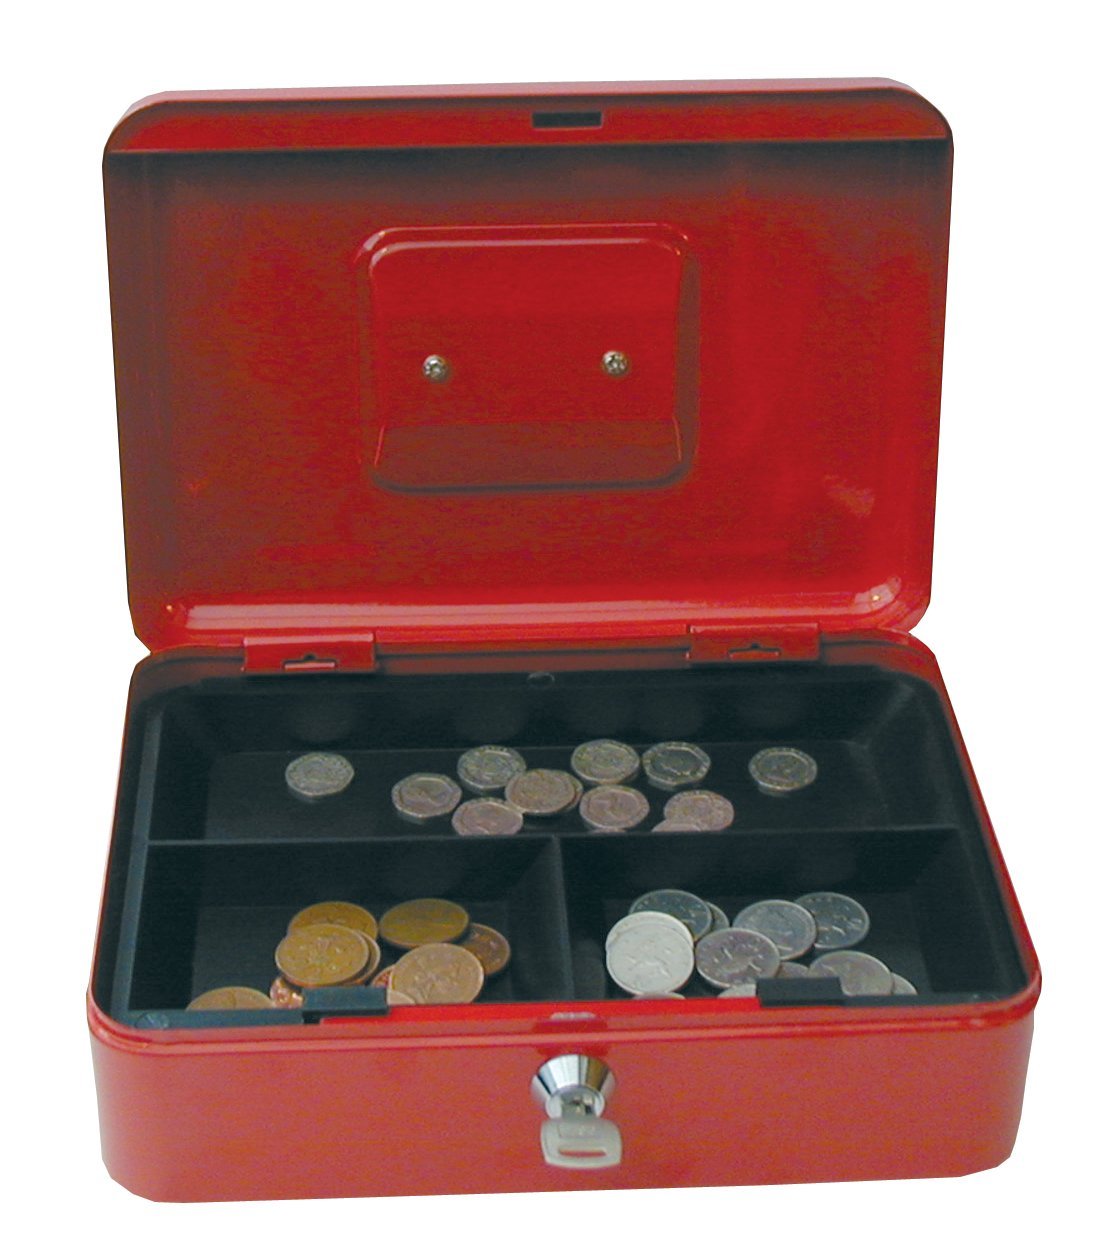 ValueX Metal Cash Box 300mm (12 Inch) Key Lock Red